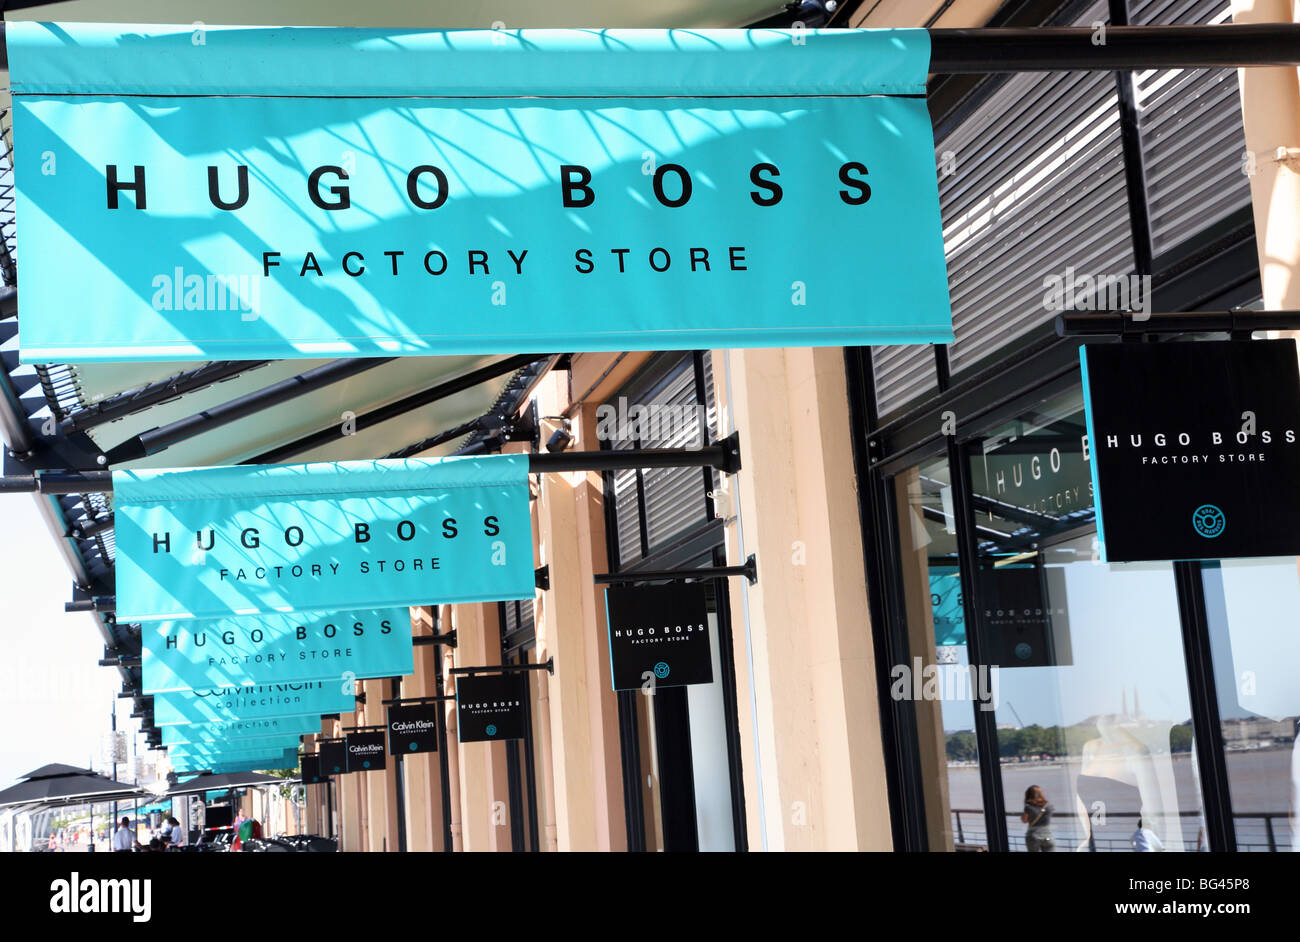 Hugo Boss factory store in Les Hangars, Bordeaux, France Stock Photo - Alamy